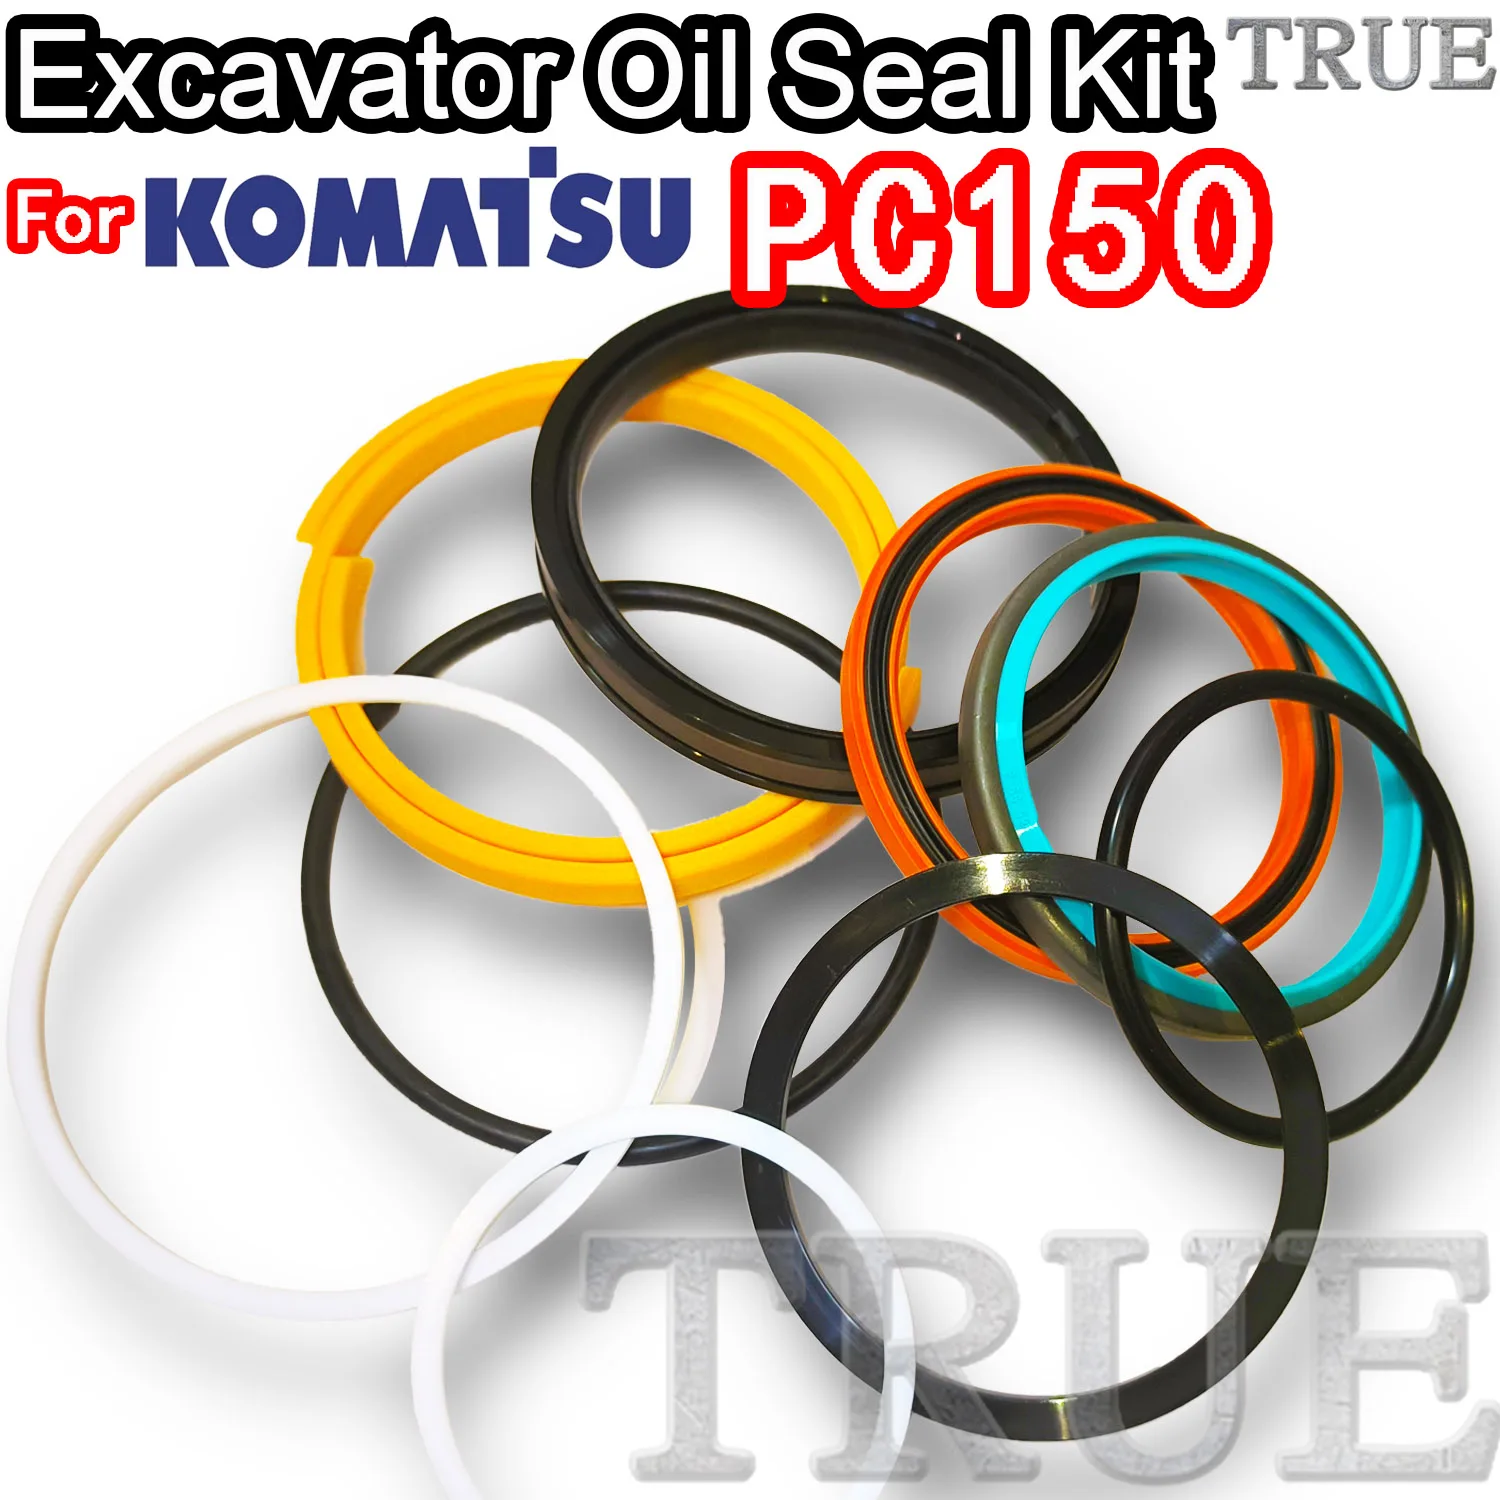 

For KOMATSU PC150 Excavator Oil Seals Kit Repair MOTOR Piston Rod Shaft Replacement Dust Bushing FKM High Quality Hit VLE Blade